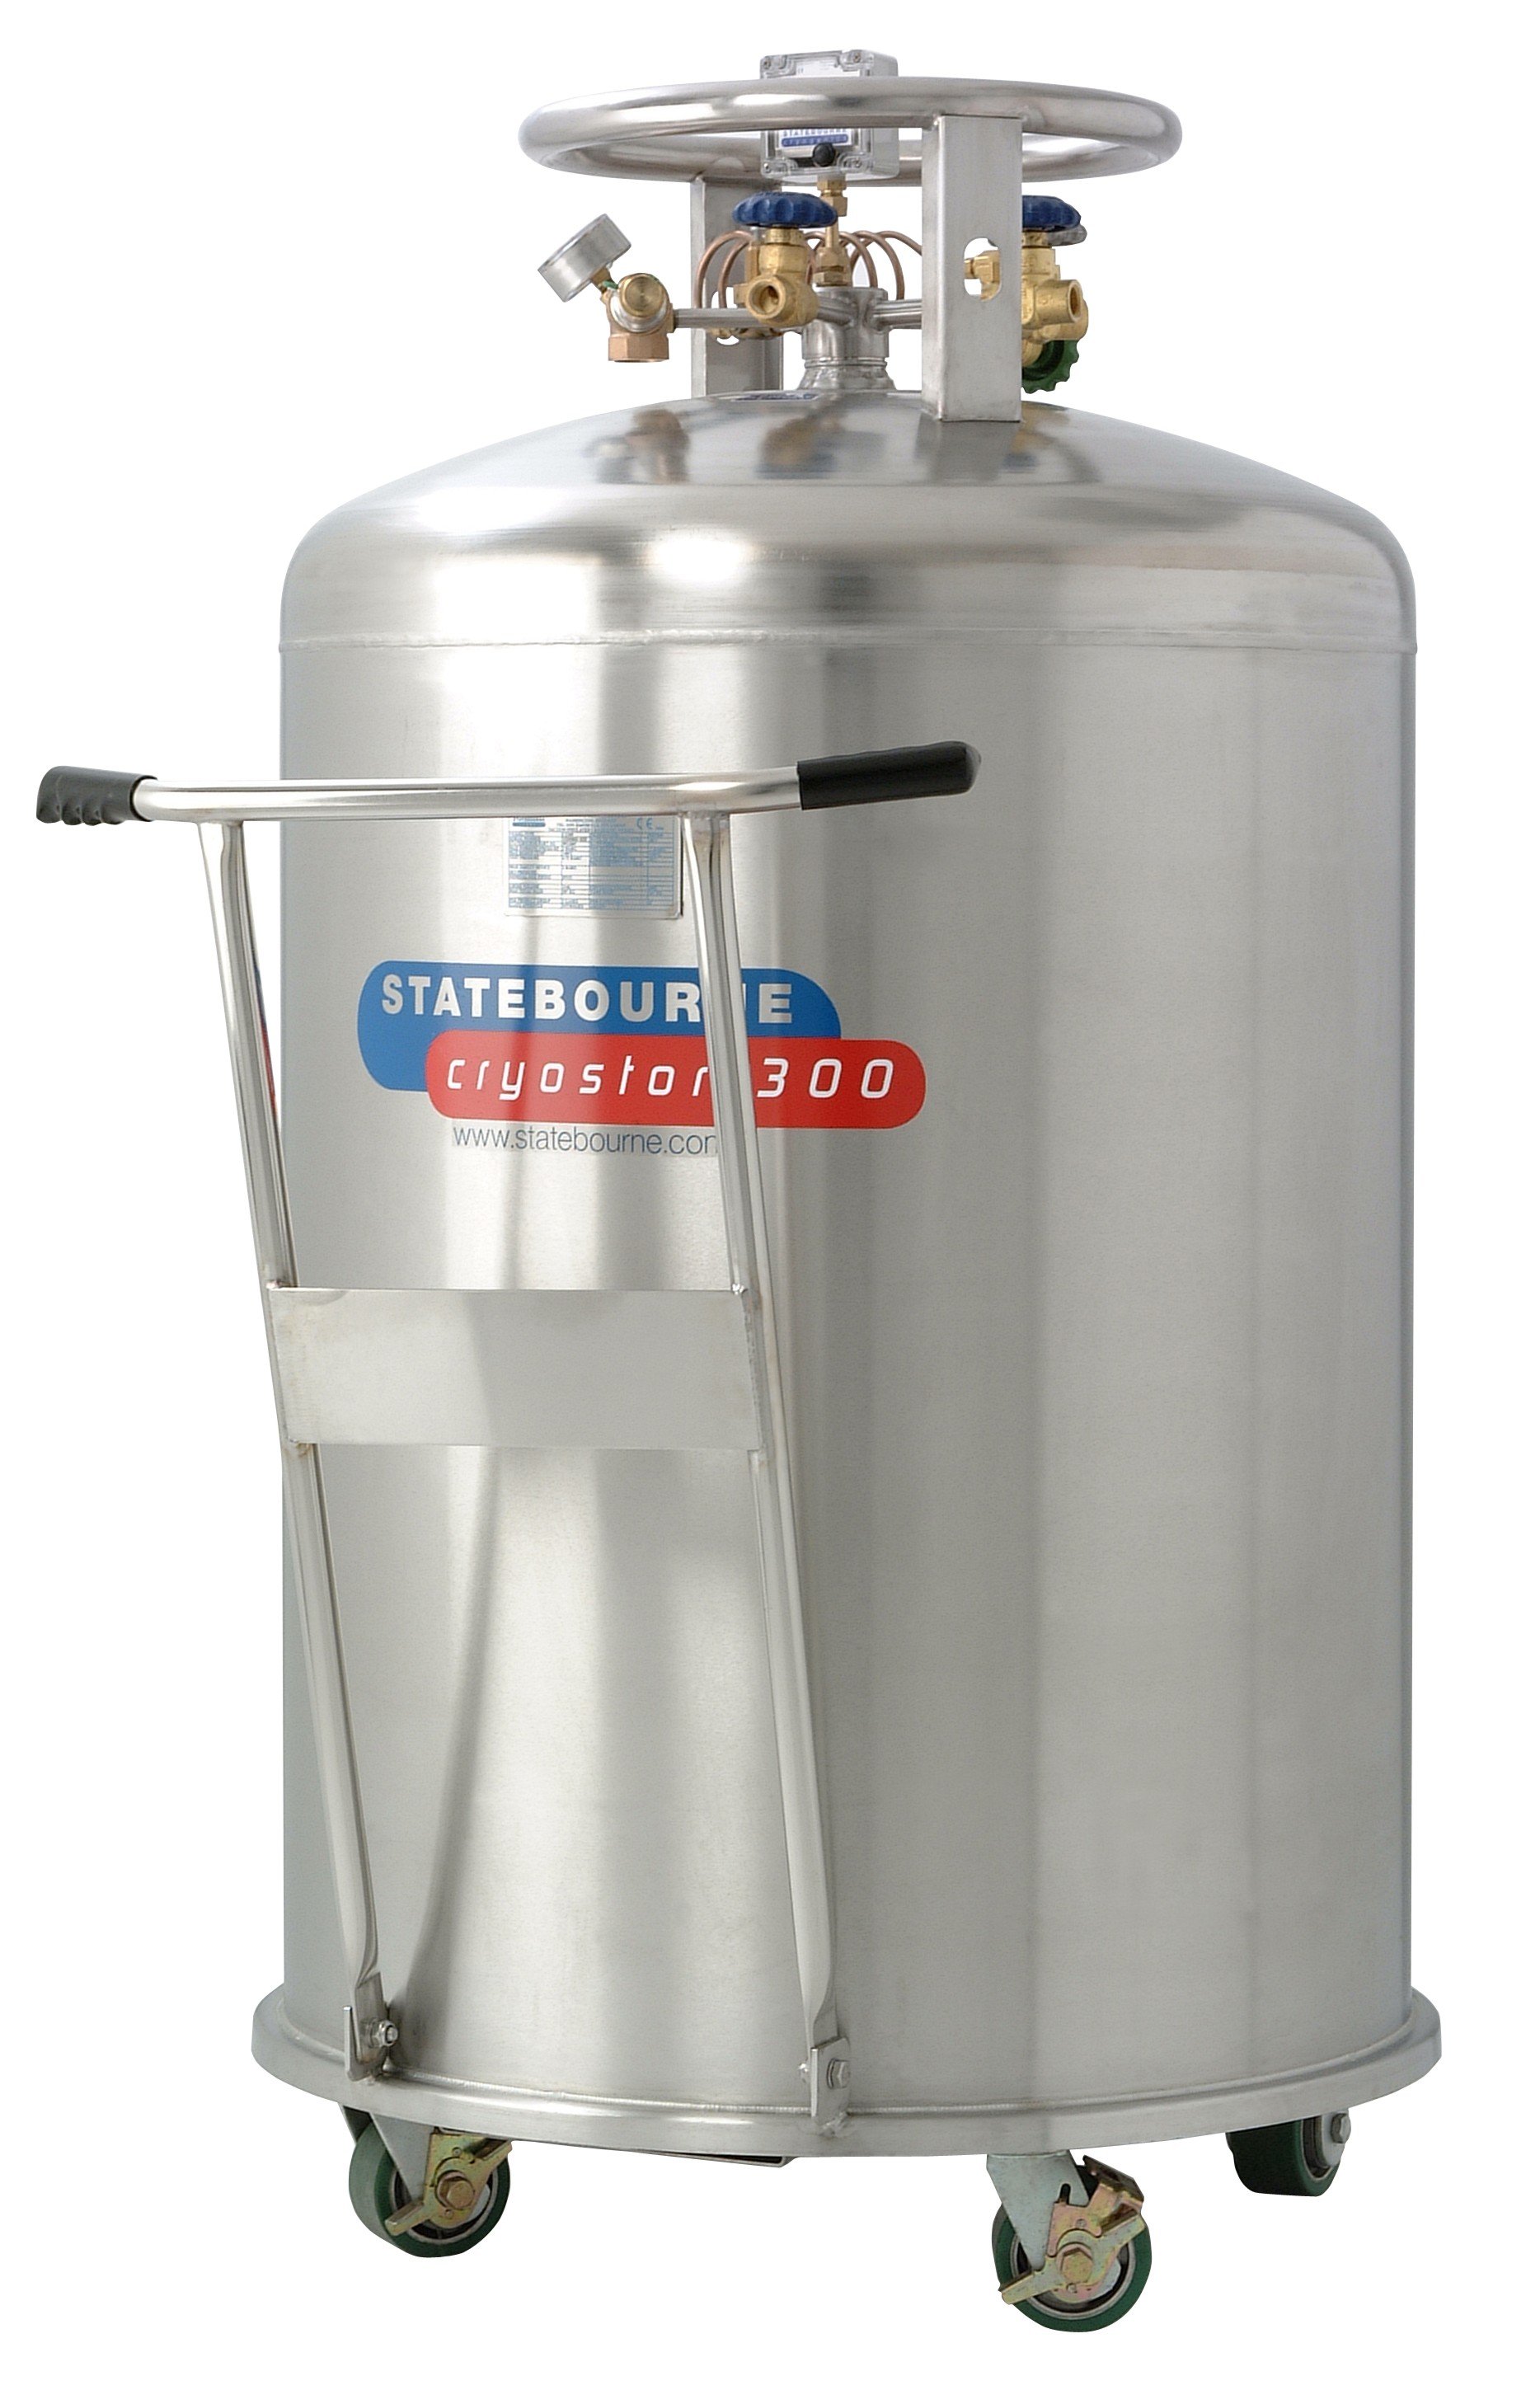 Statebourne Cryogenics 9911089 Cryostor 300 Stainless Steel Low Pressure LN2 Dewars 300 Litres for storage and dispensing liquid nitrogen